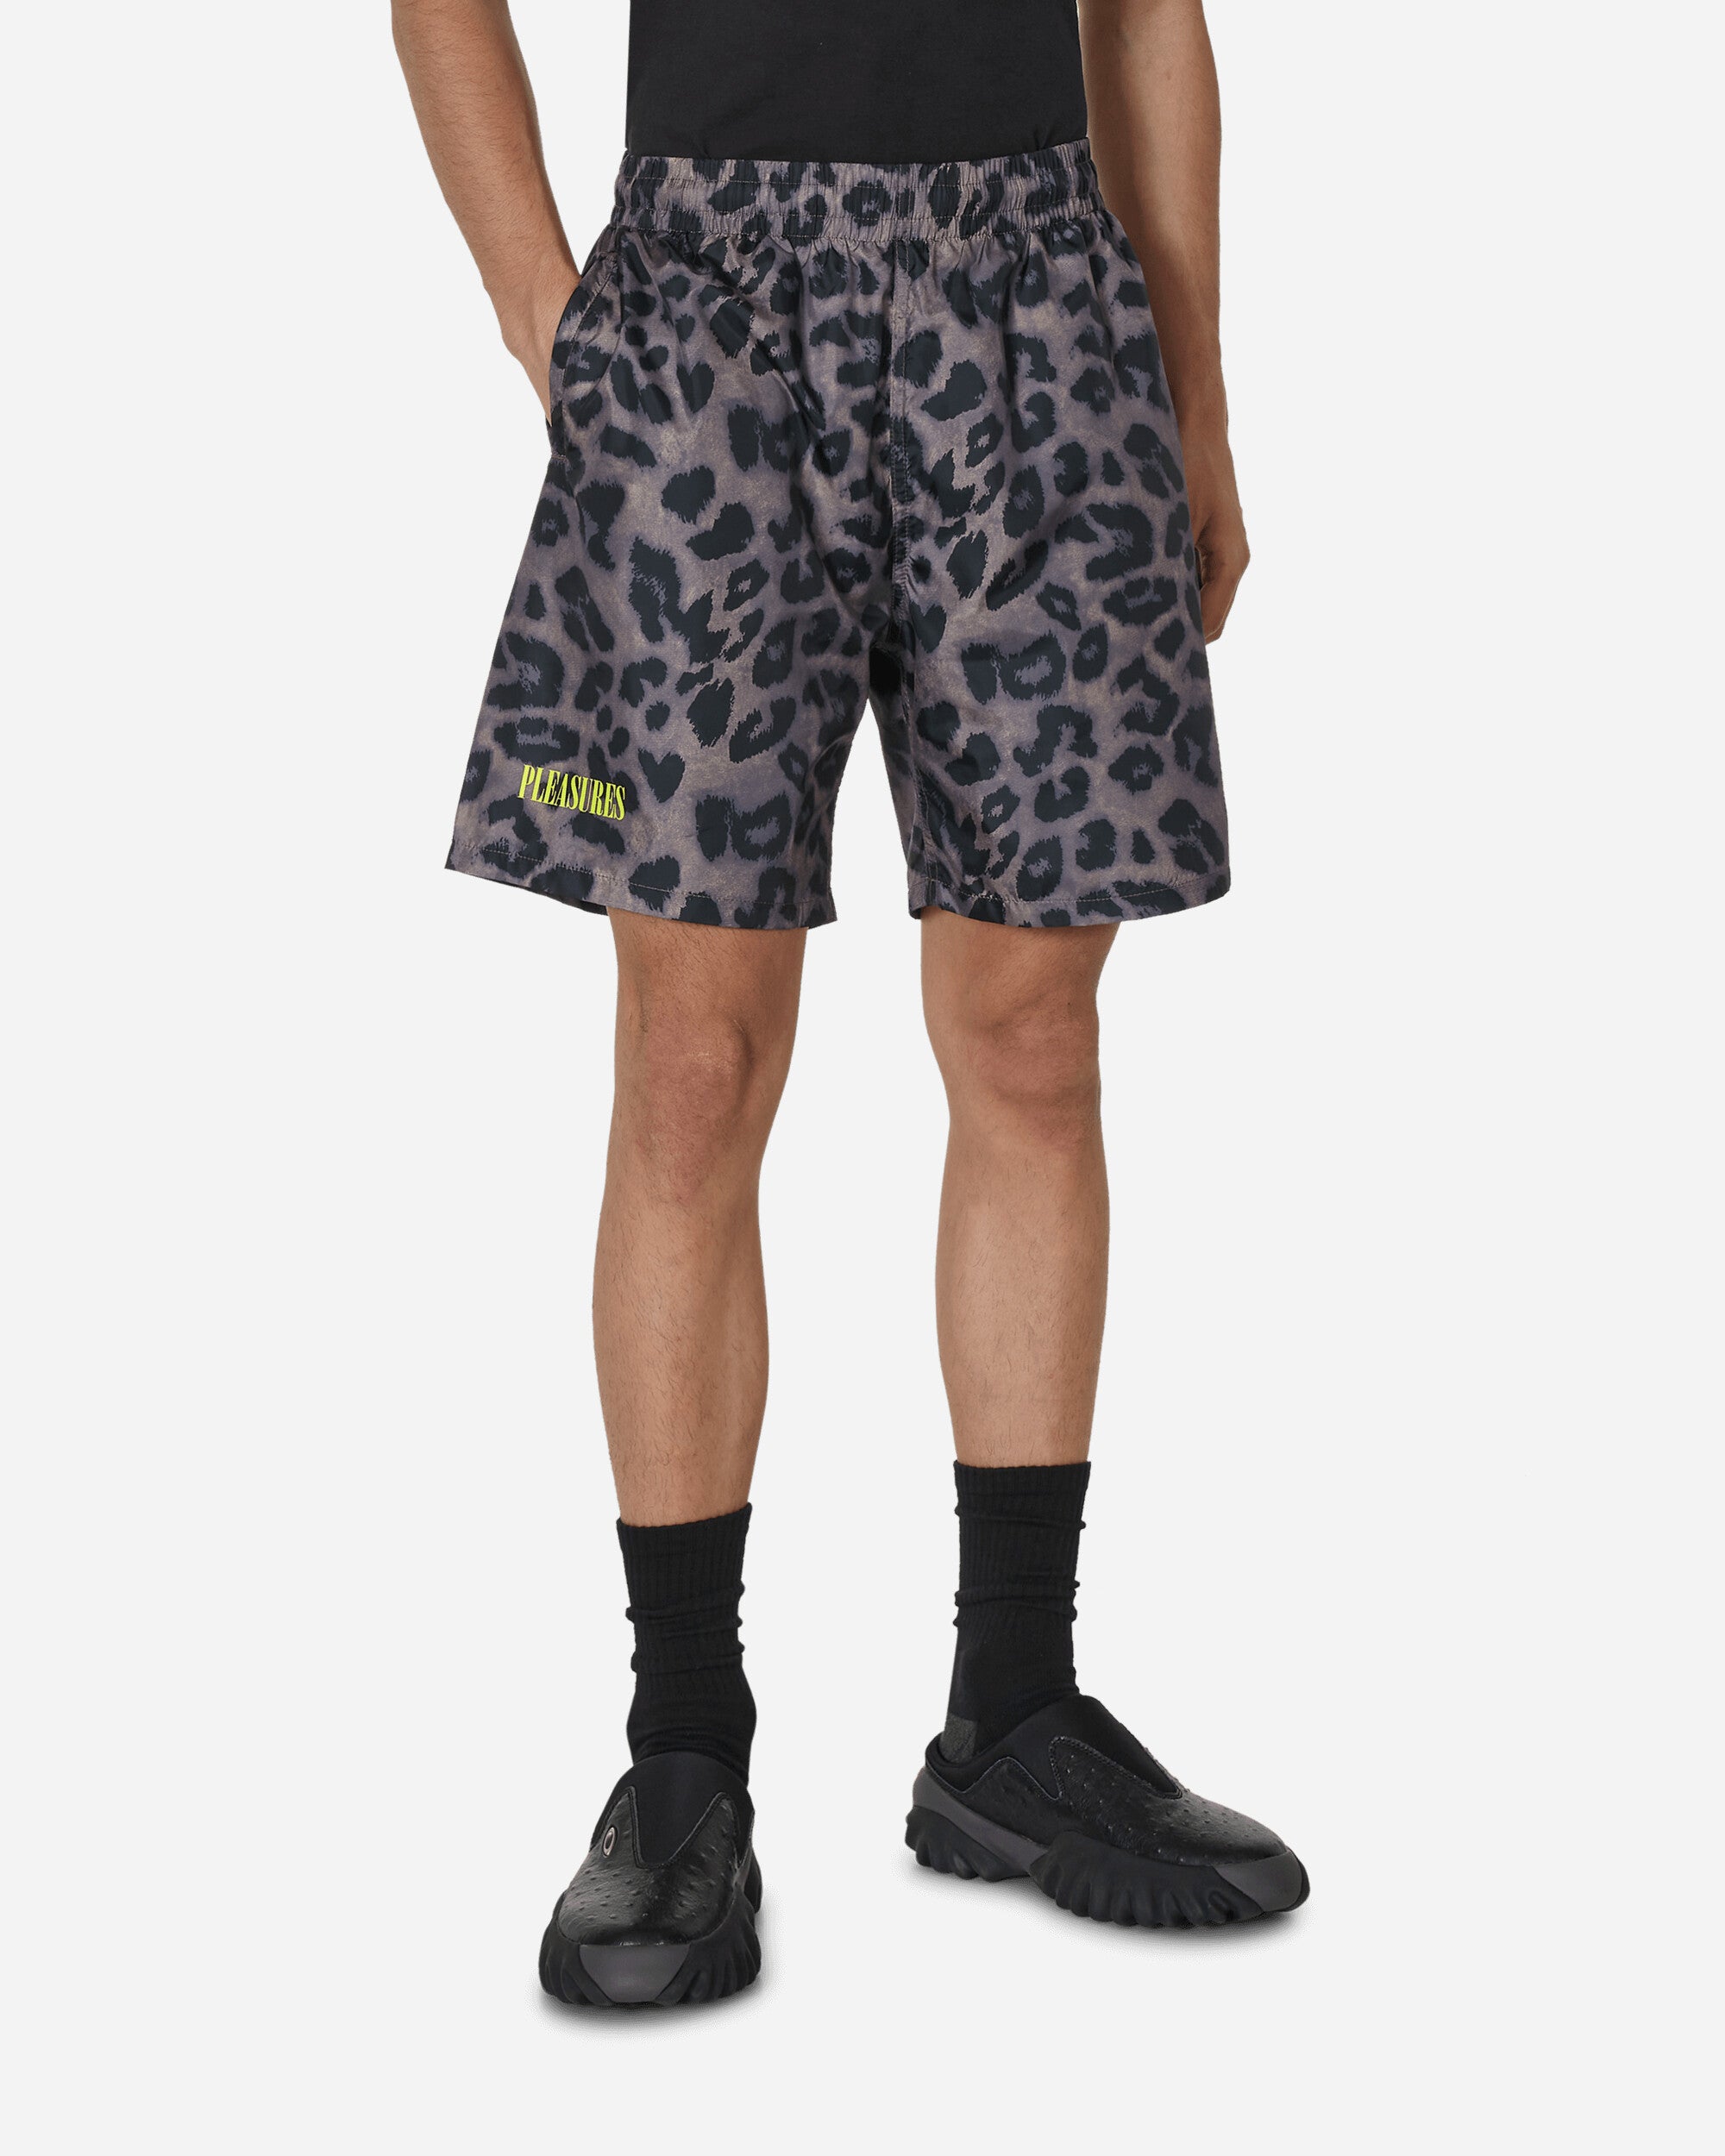 Pleasures Leopard Running Shorts Brown - Slam Jam® Official Store